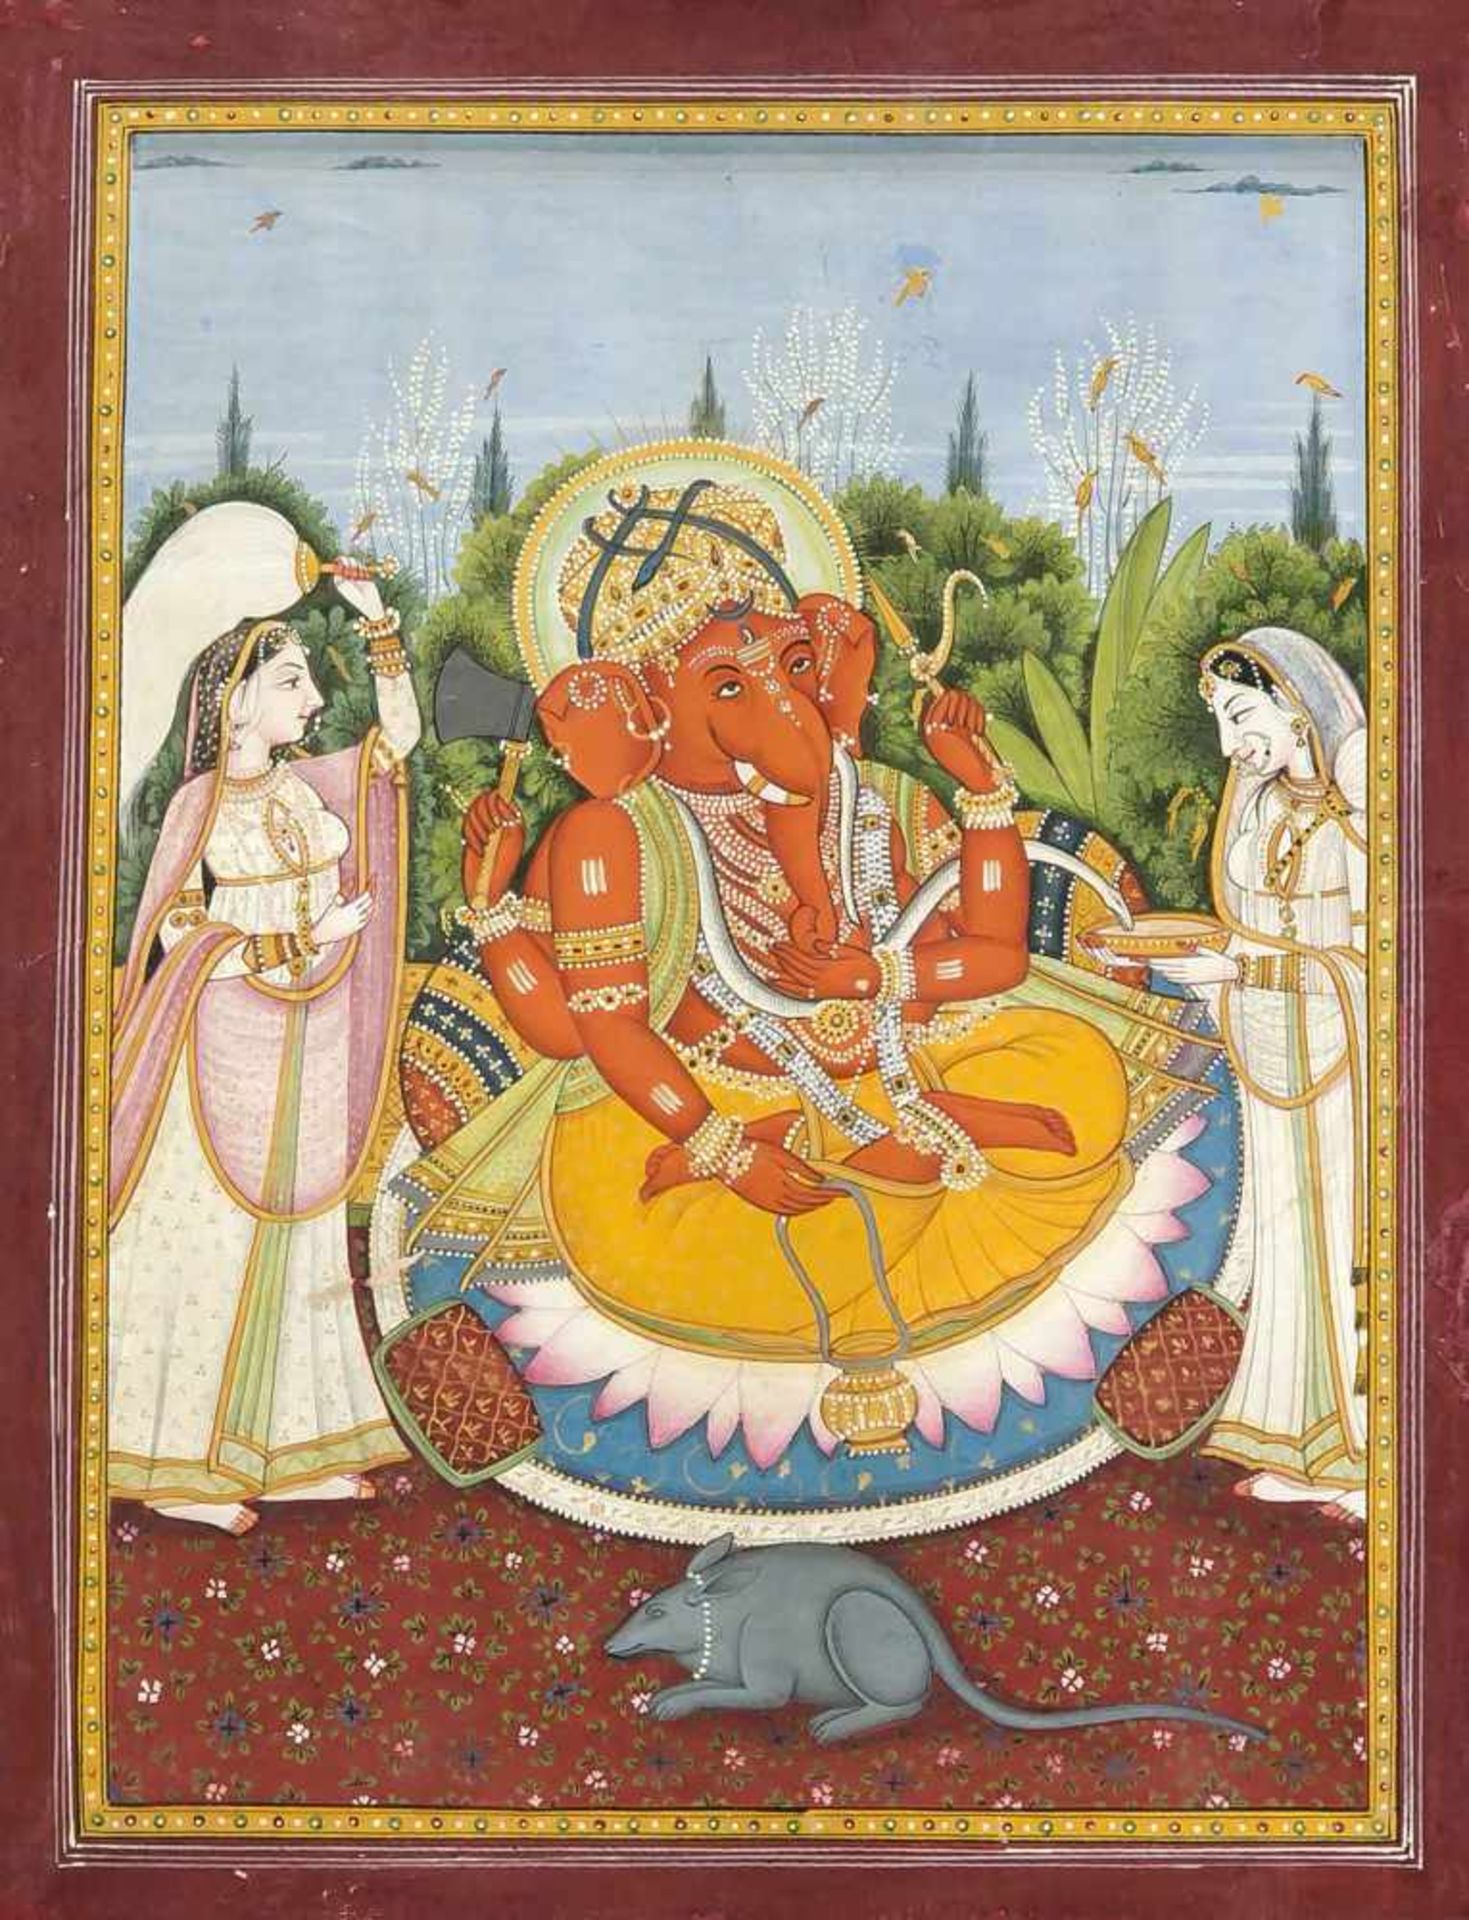 Indische Malerei, Kangra-Schule, Ende 19. Jh., polychrome Pigmente auf festem Papier, goldgehöht,